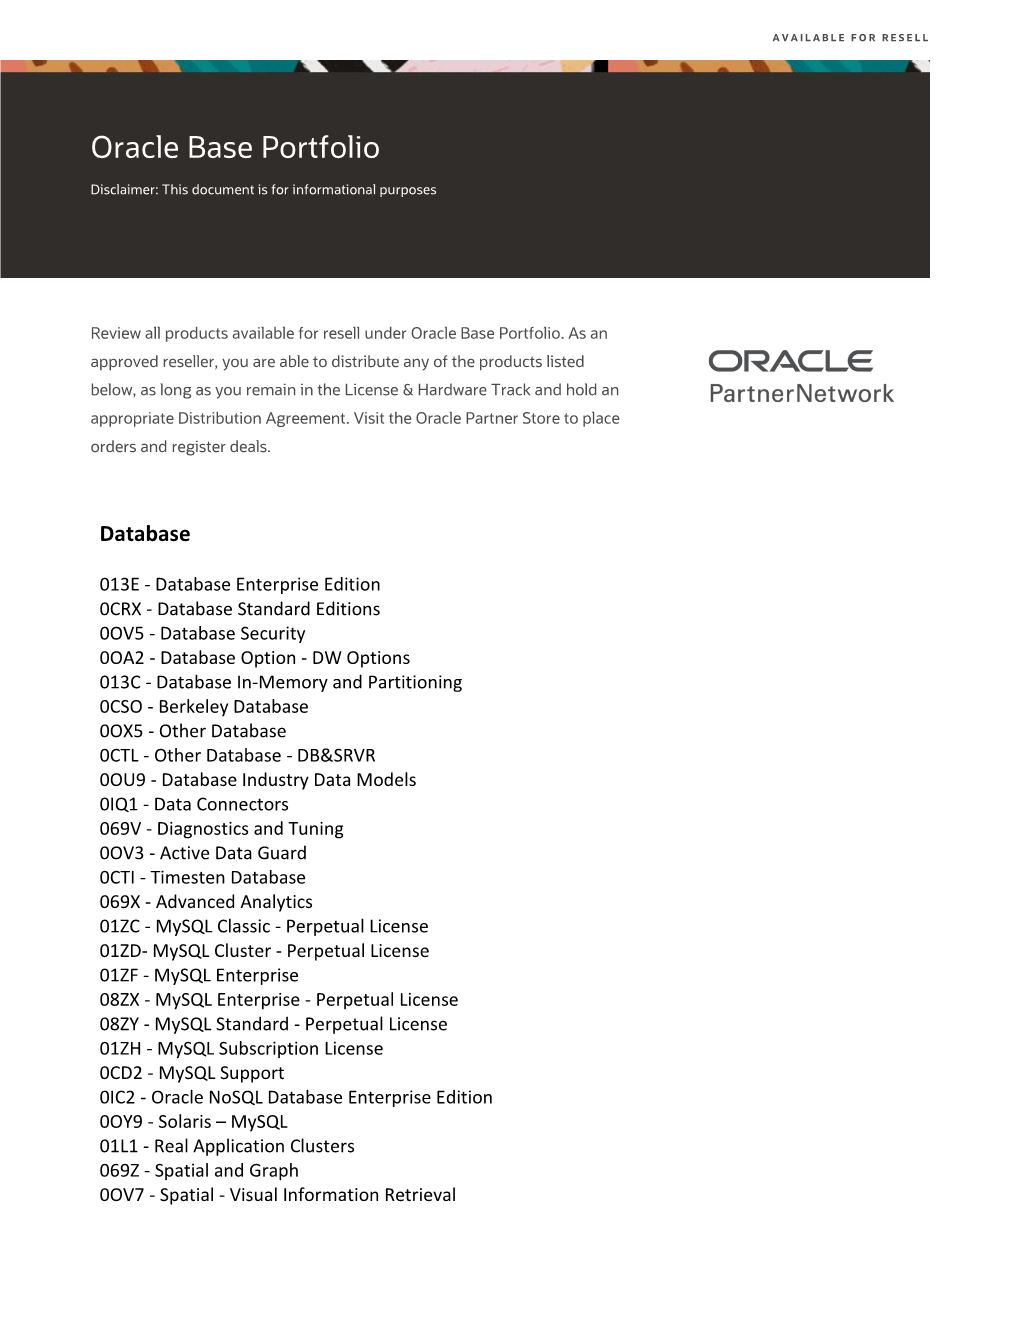 Oracle Base Portfolio List